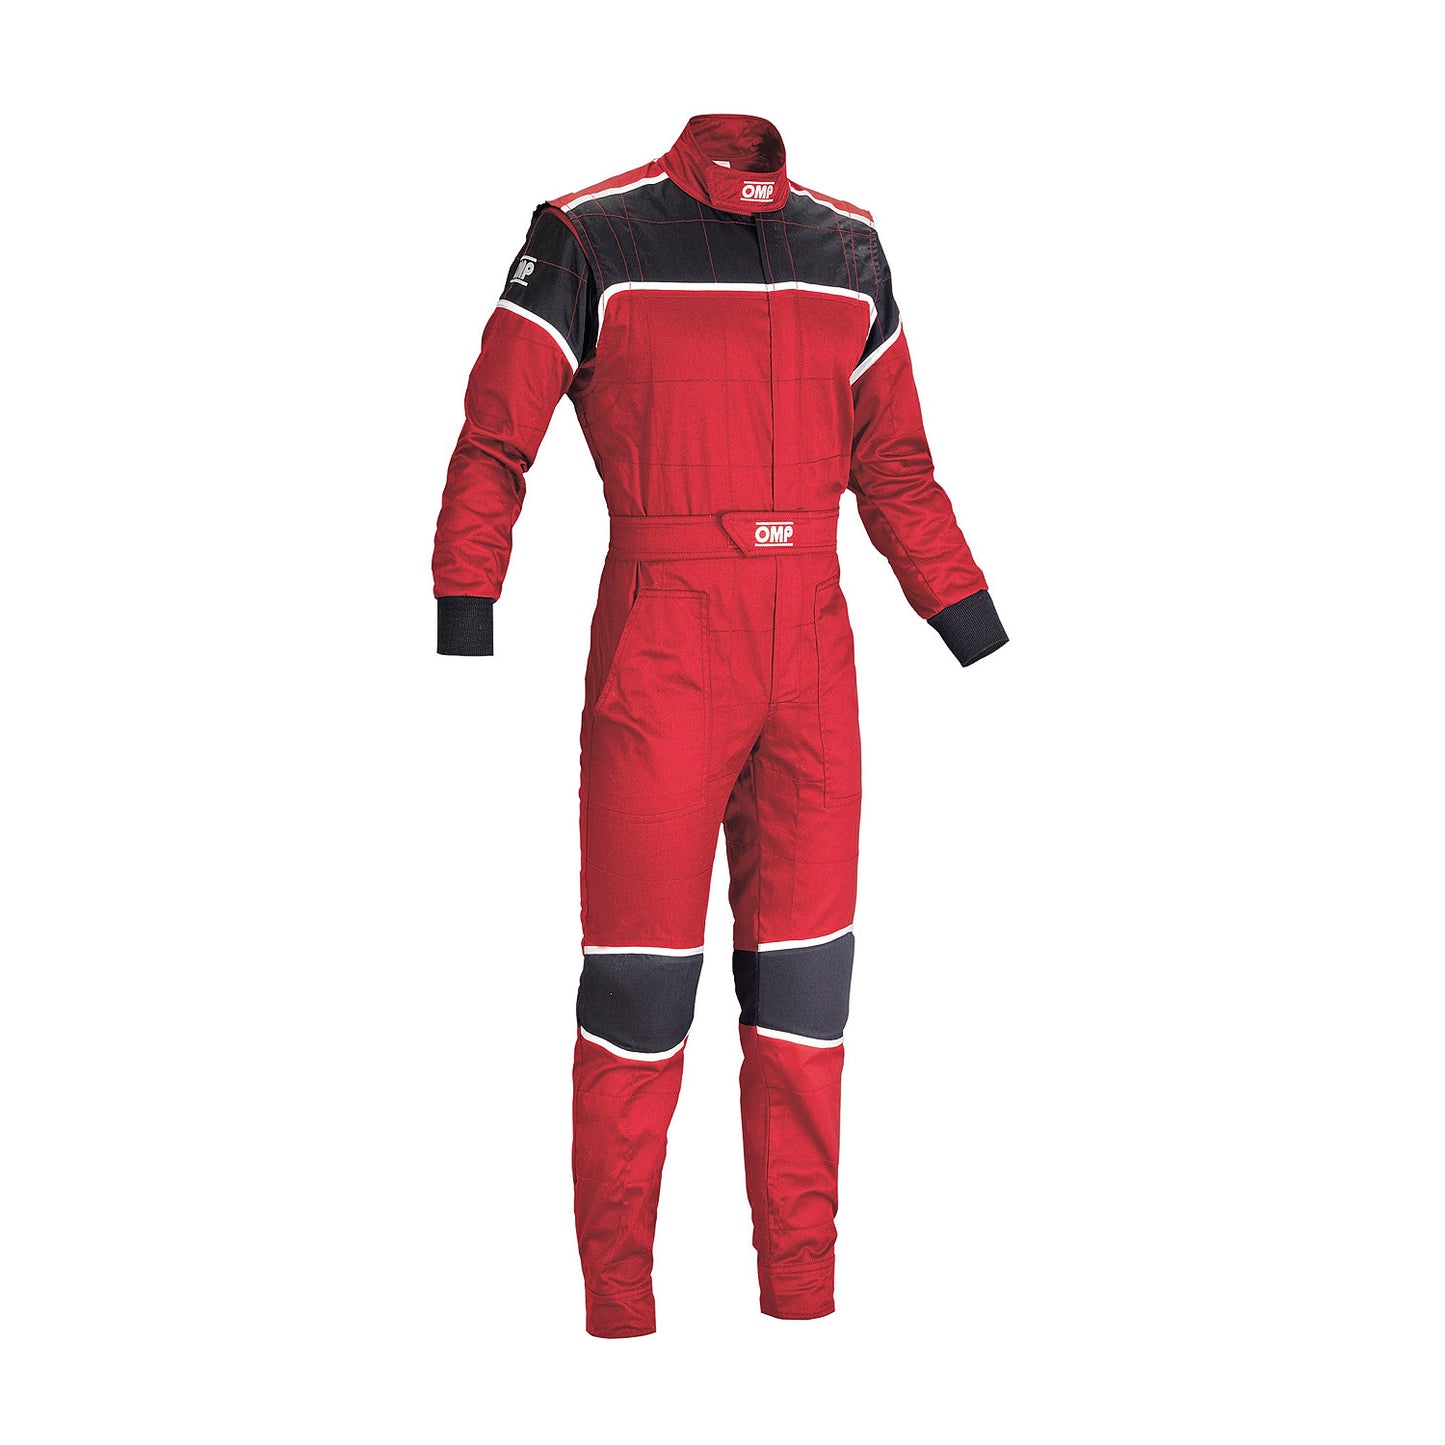 OMP BLAST red Mechanics Suit